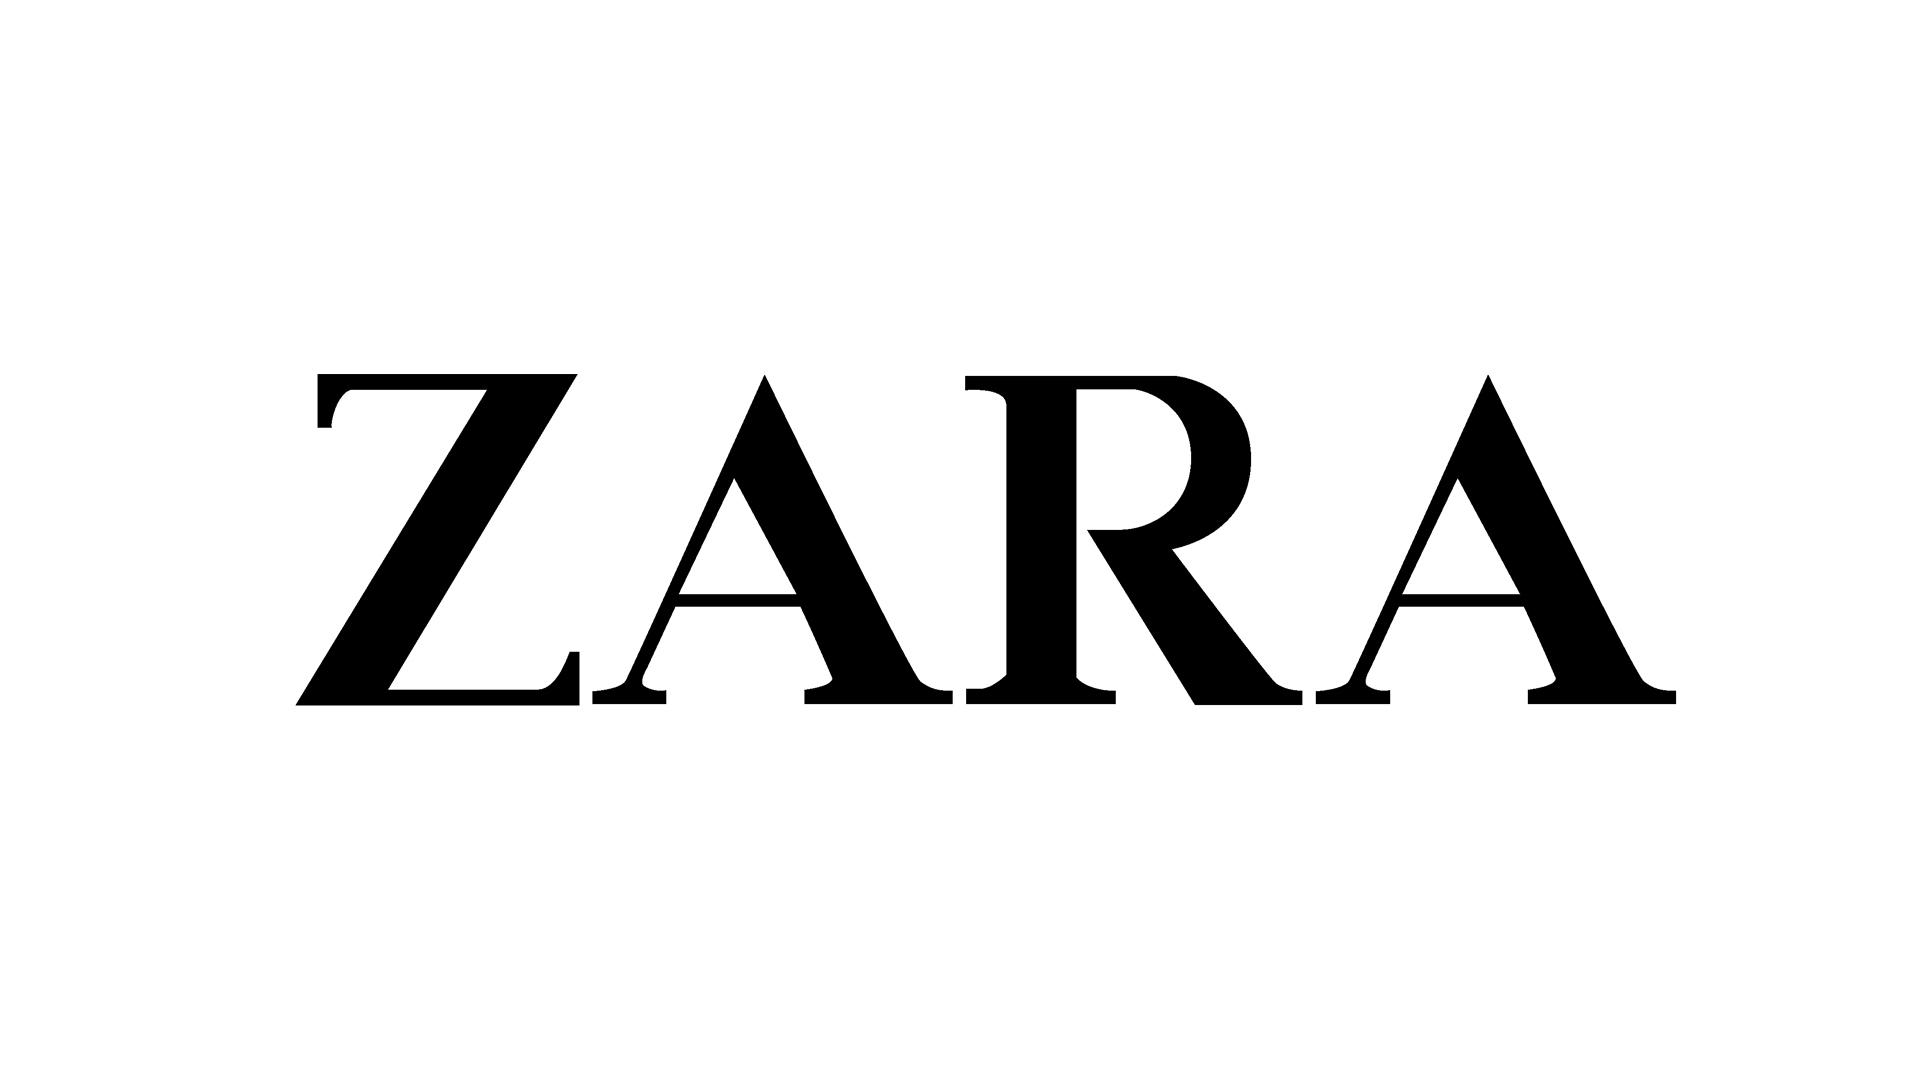 Fashion brand Zara wallpaper and image, picture, photo